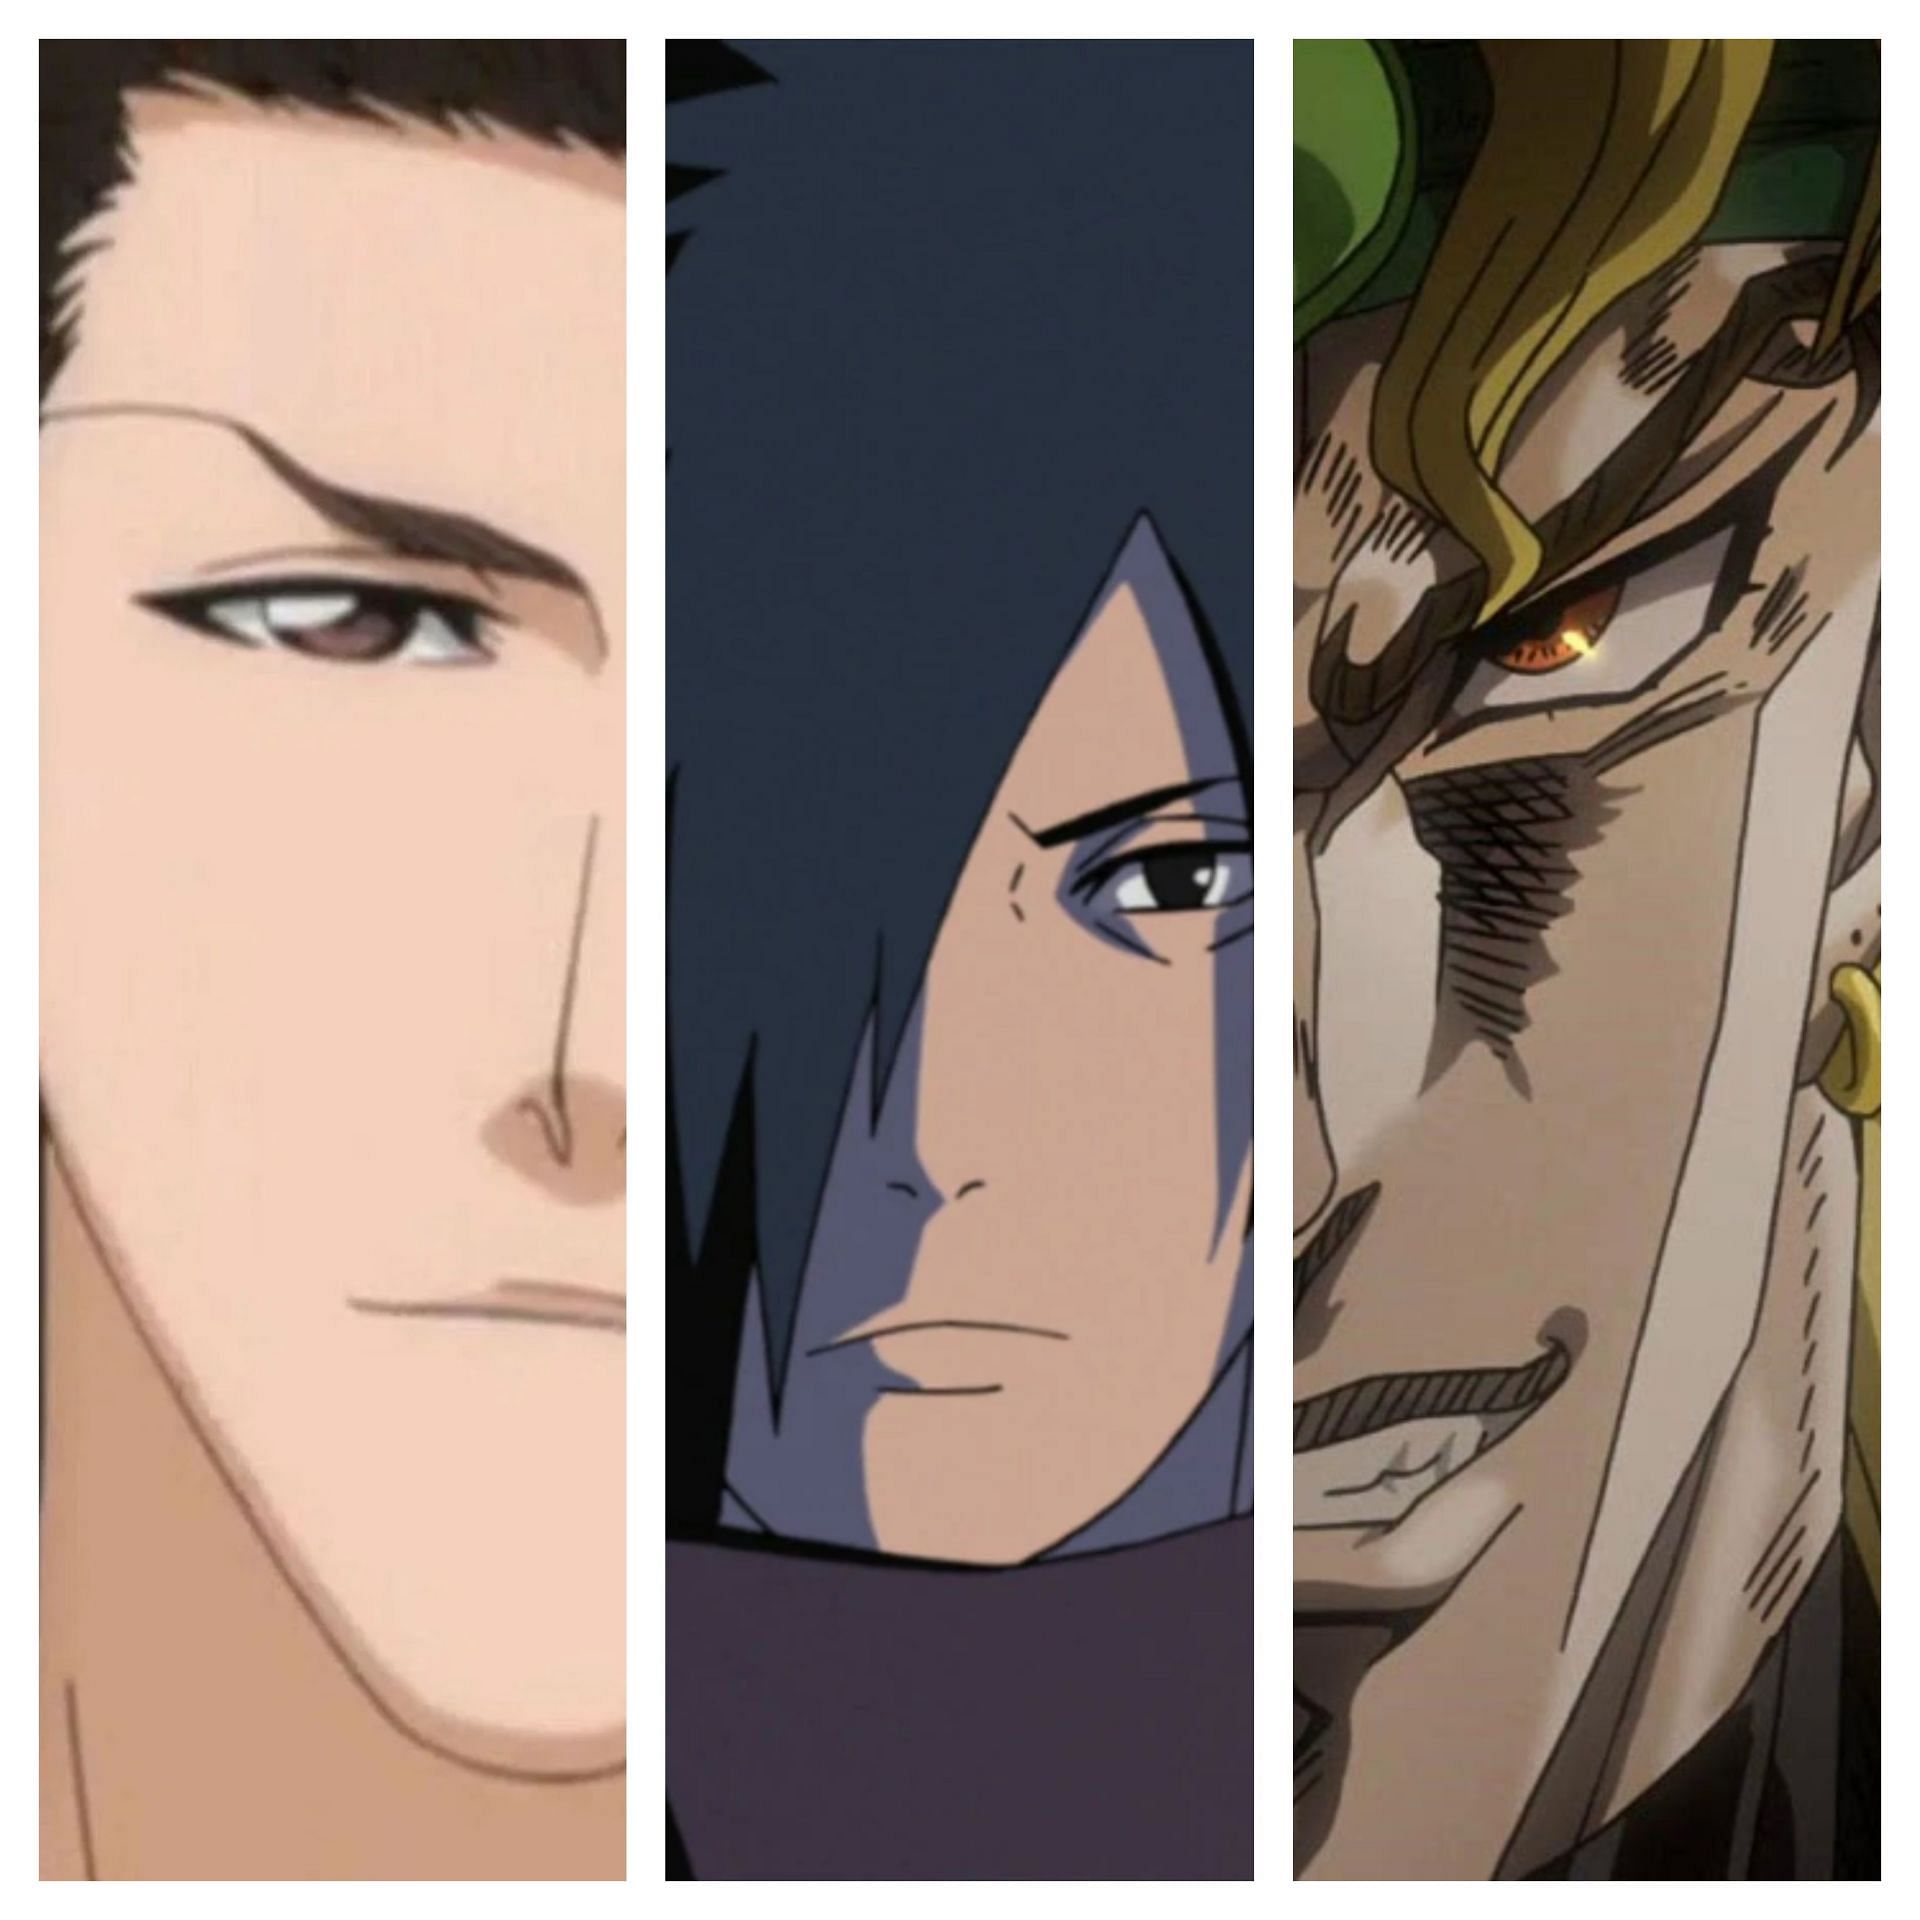 Madara, Dio, and Aizen. Three very popular shonen anime antagonists (Image via Sportskeeda)